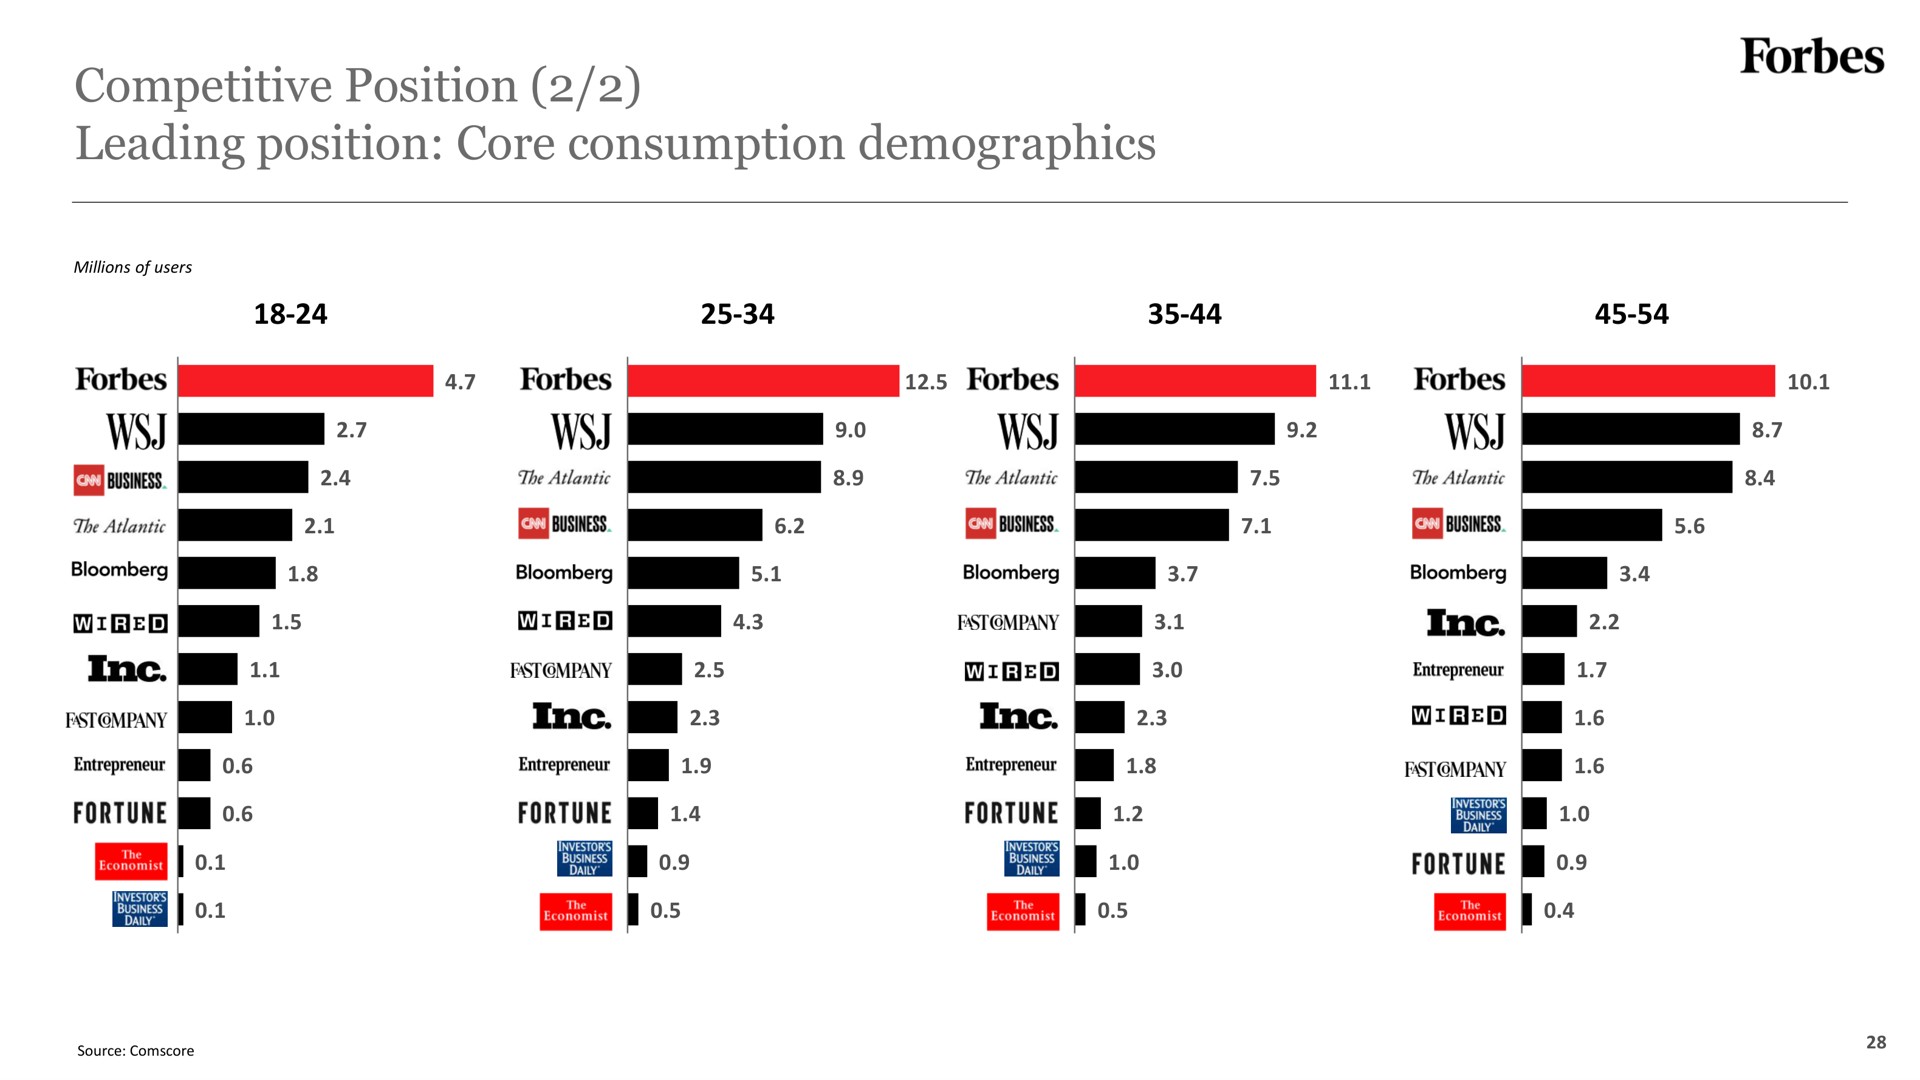 competitive position leading position core consumption demographics me | Forbes